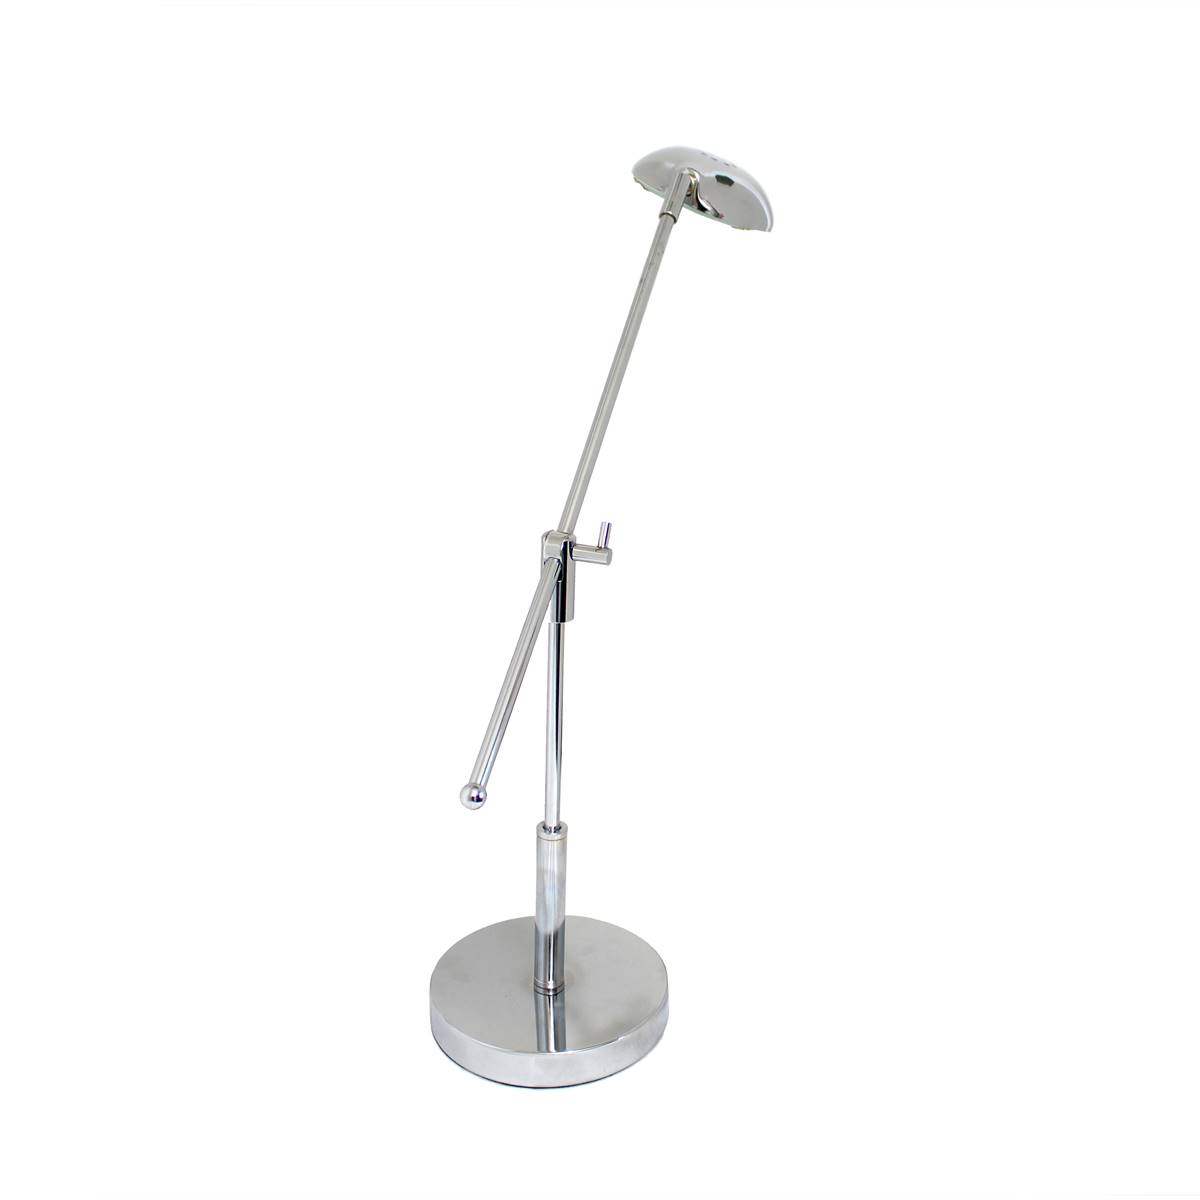 Simple Designs 3W Balance Arm LED Desk Lamp W/Swivel Head